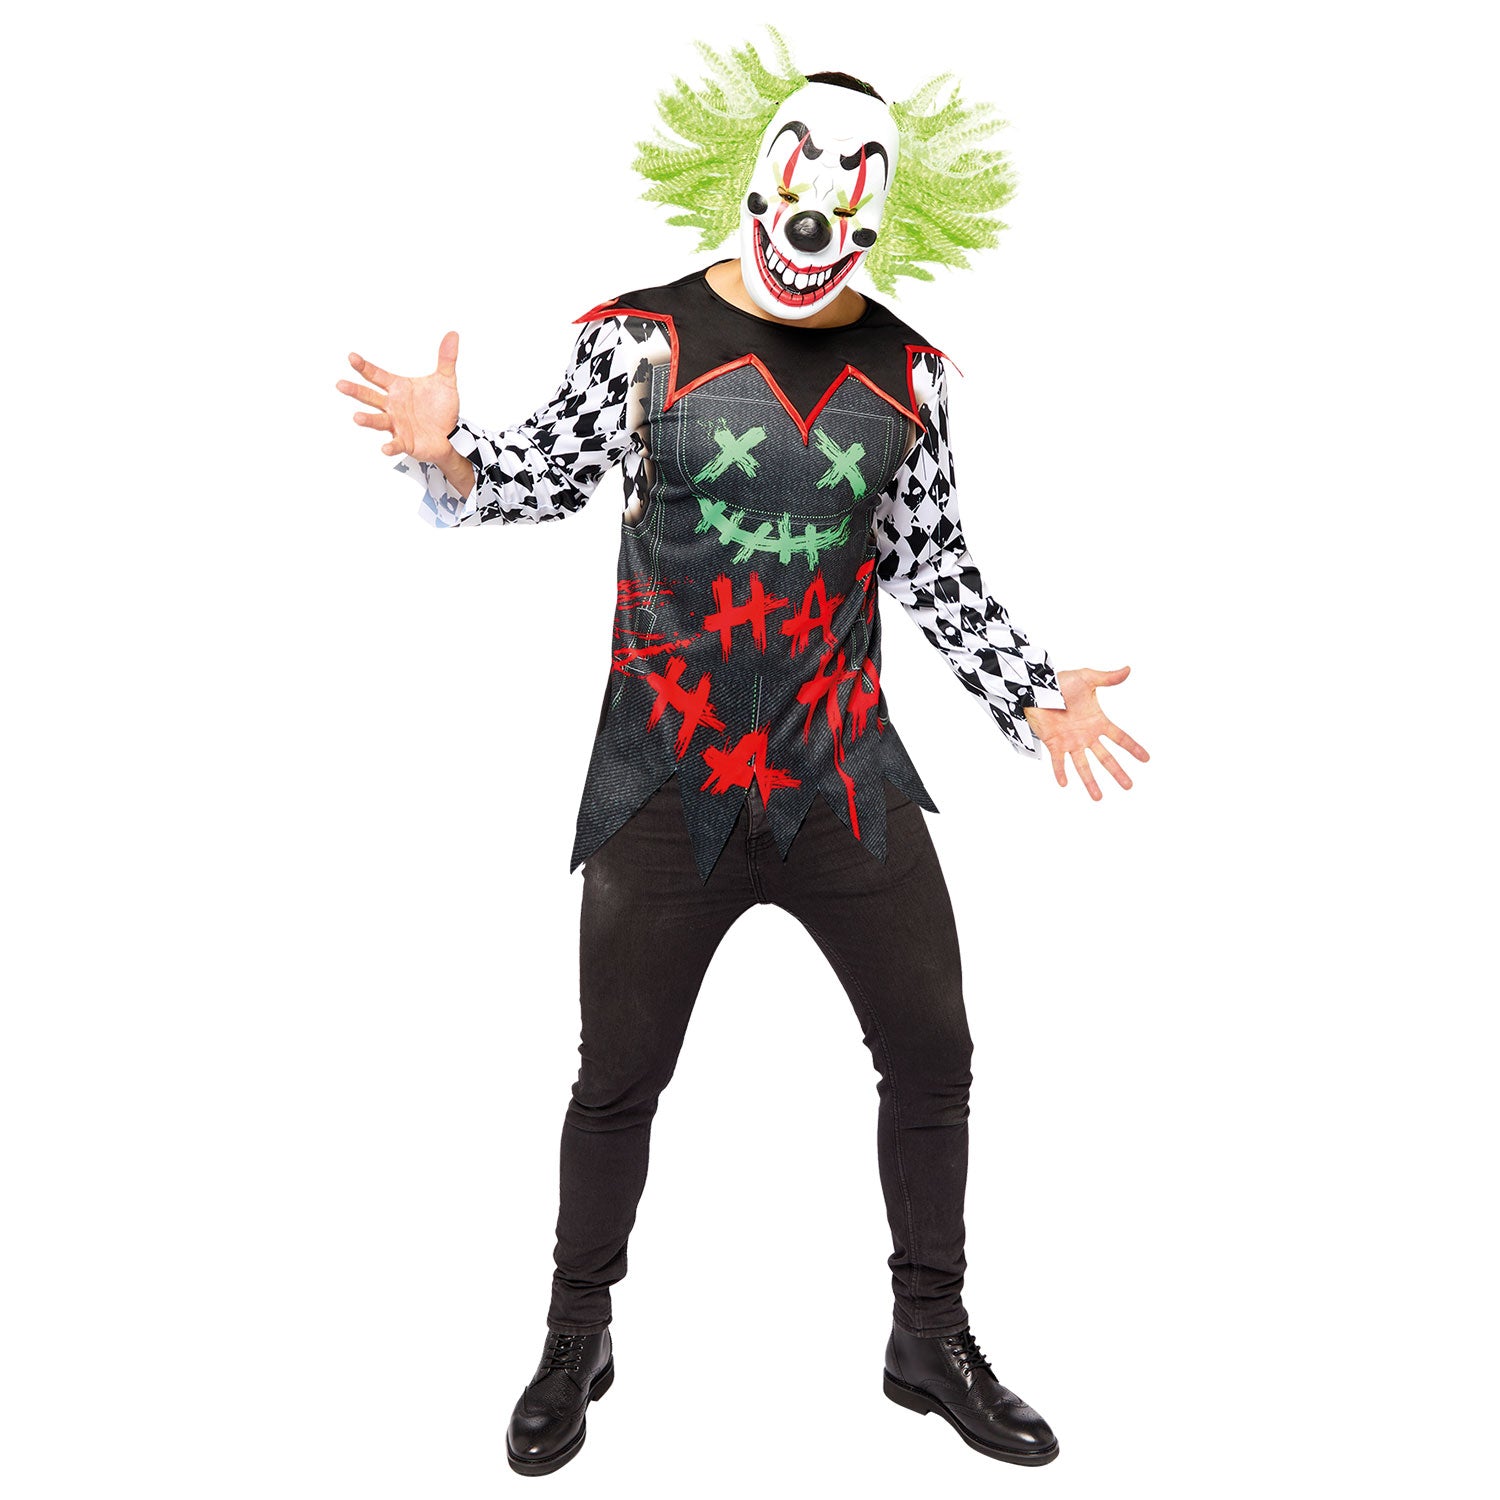 Haha Clown - Adult Costume